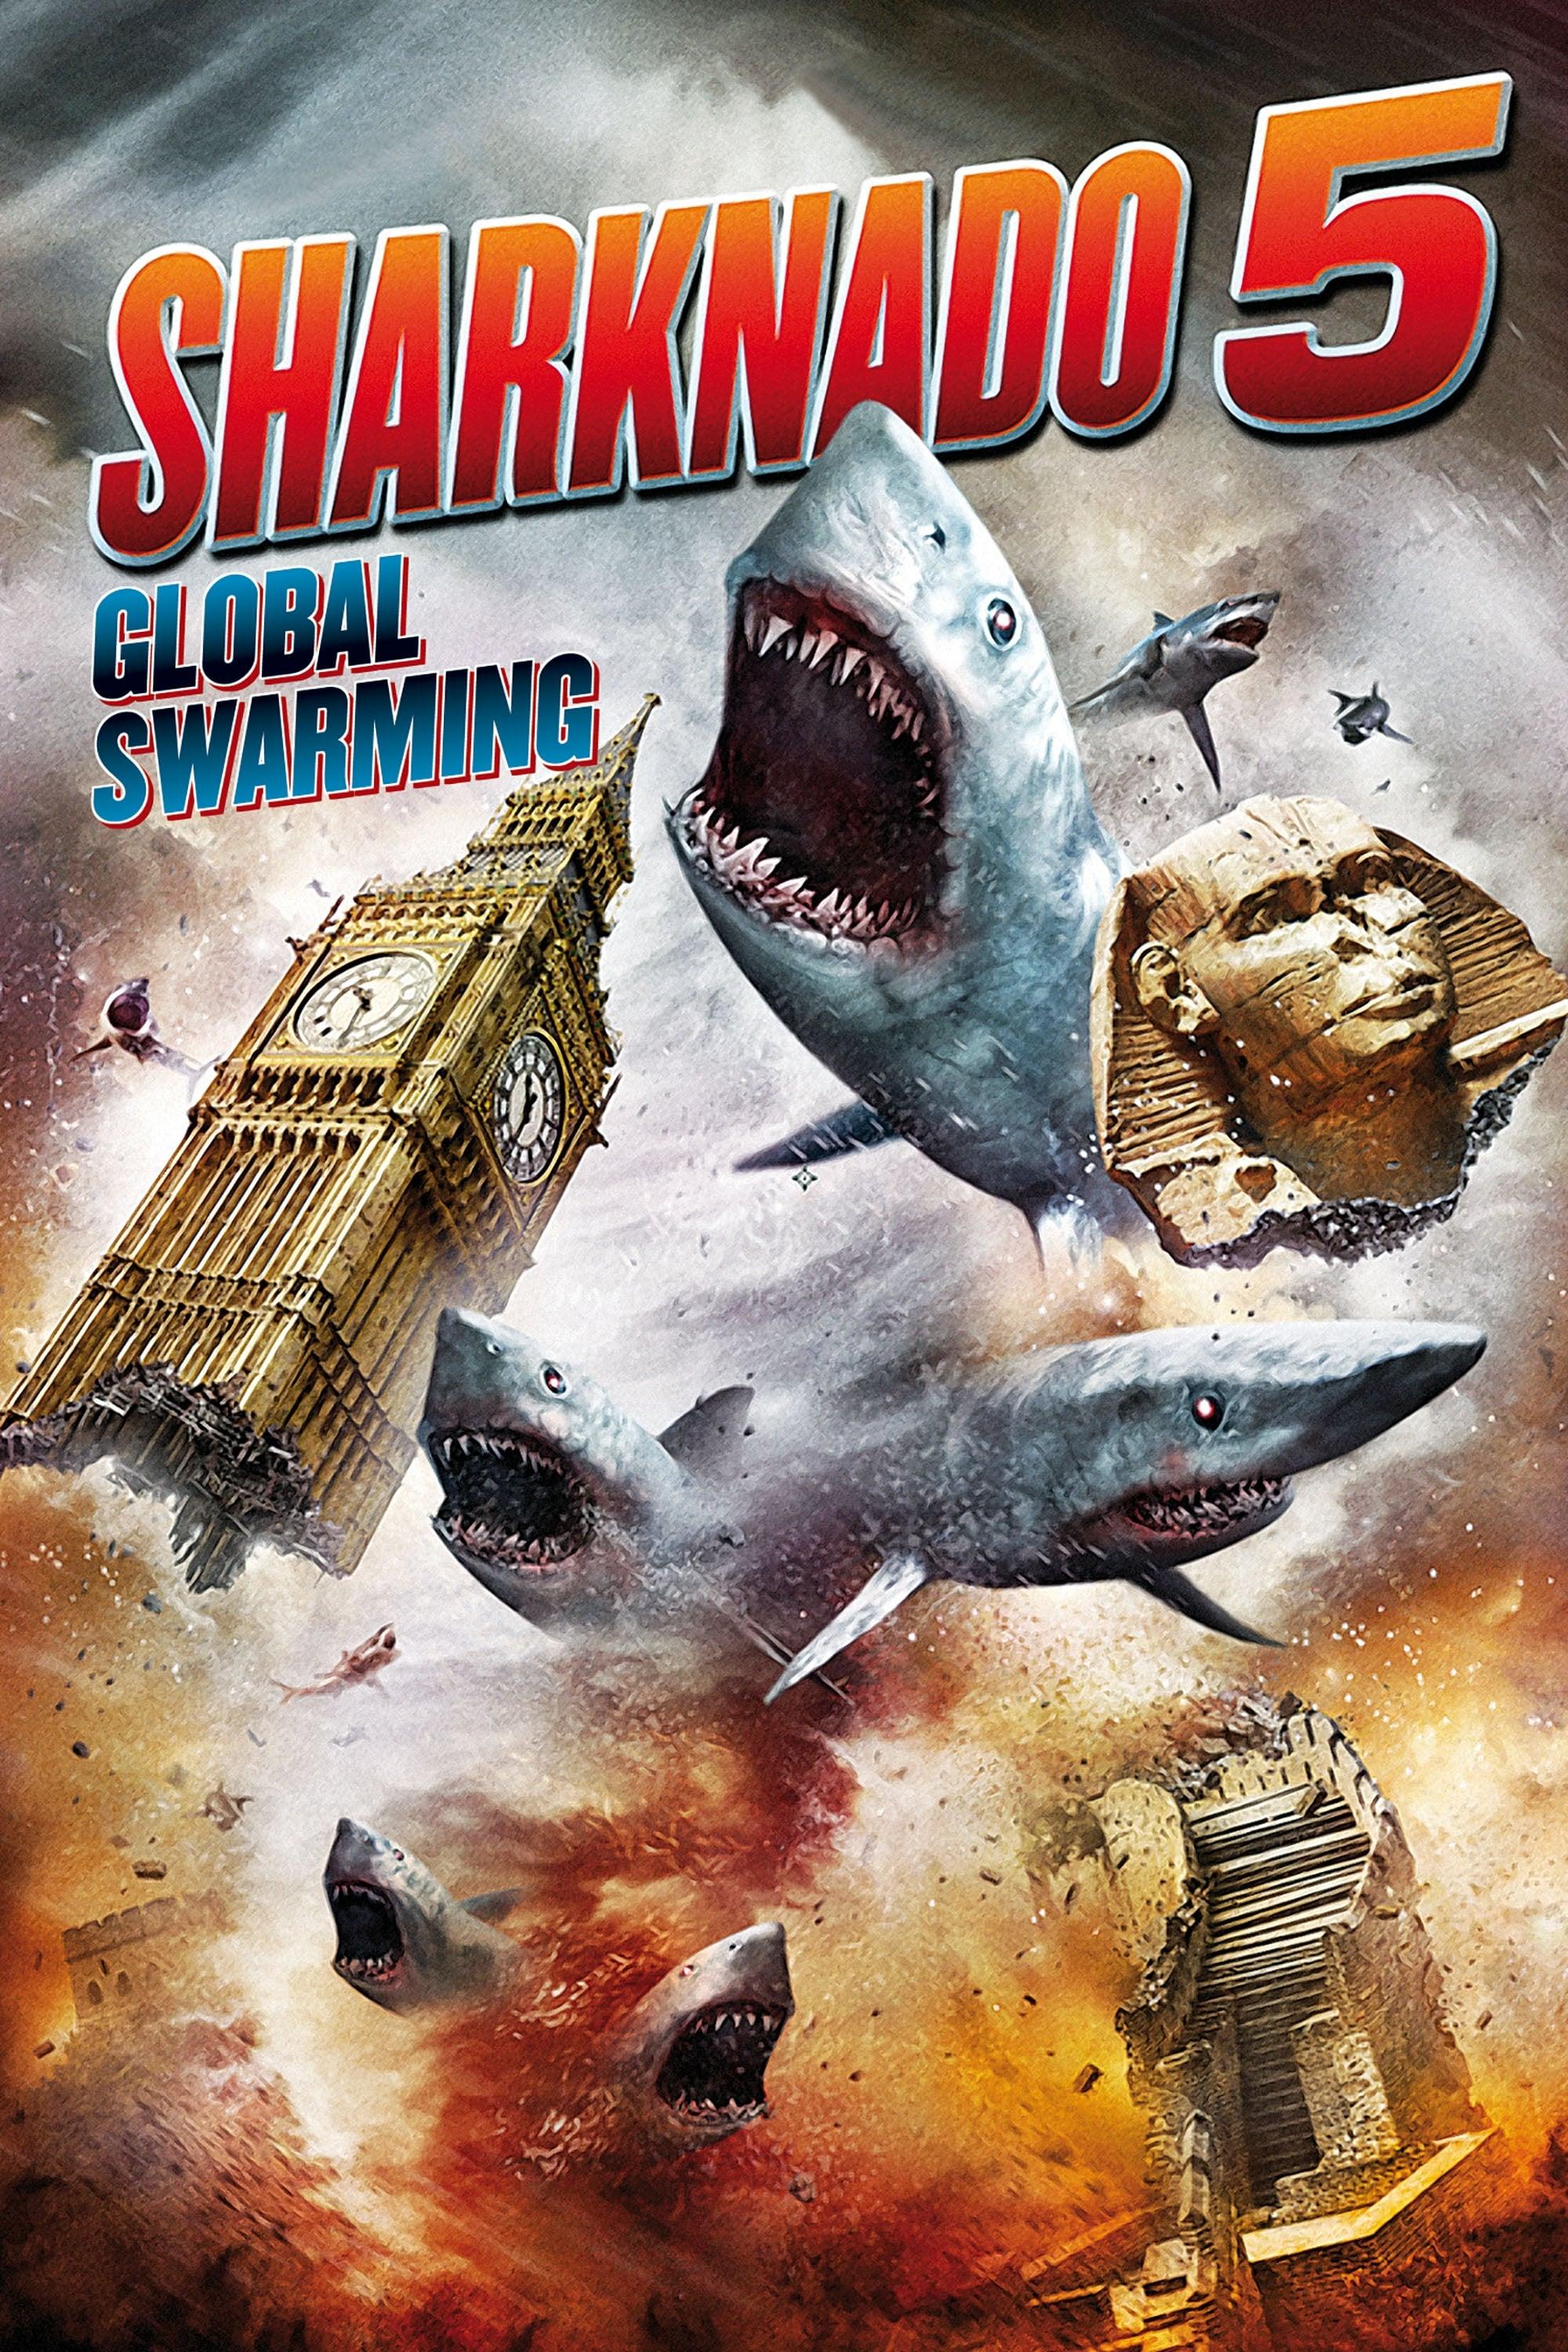 Sharknado 5: Global Swarming poster